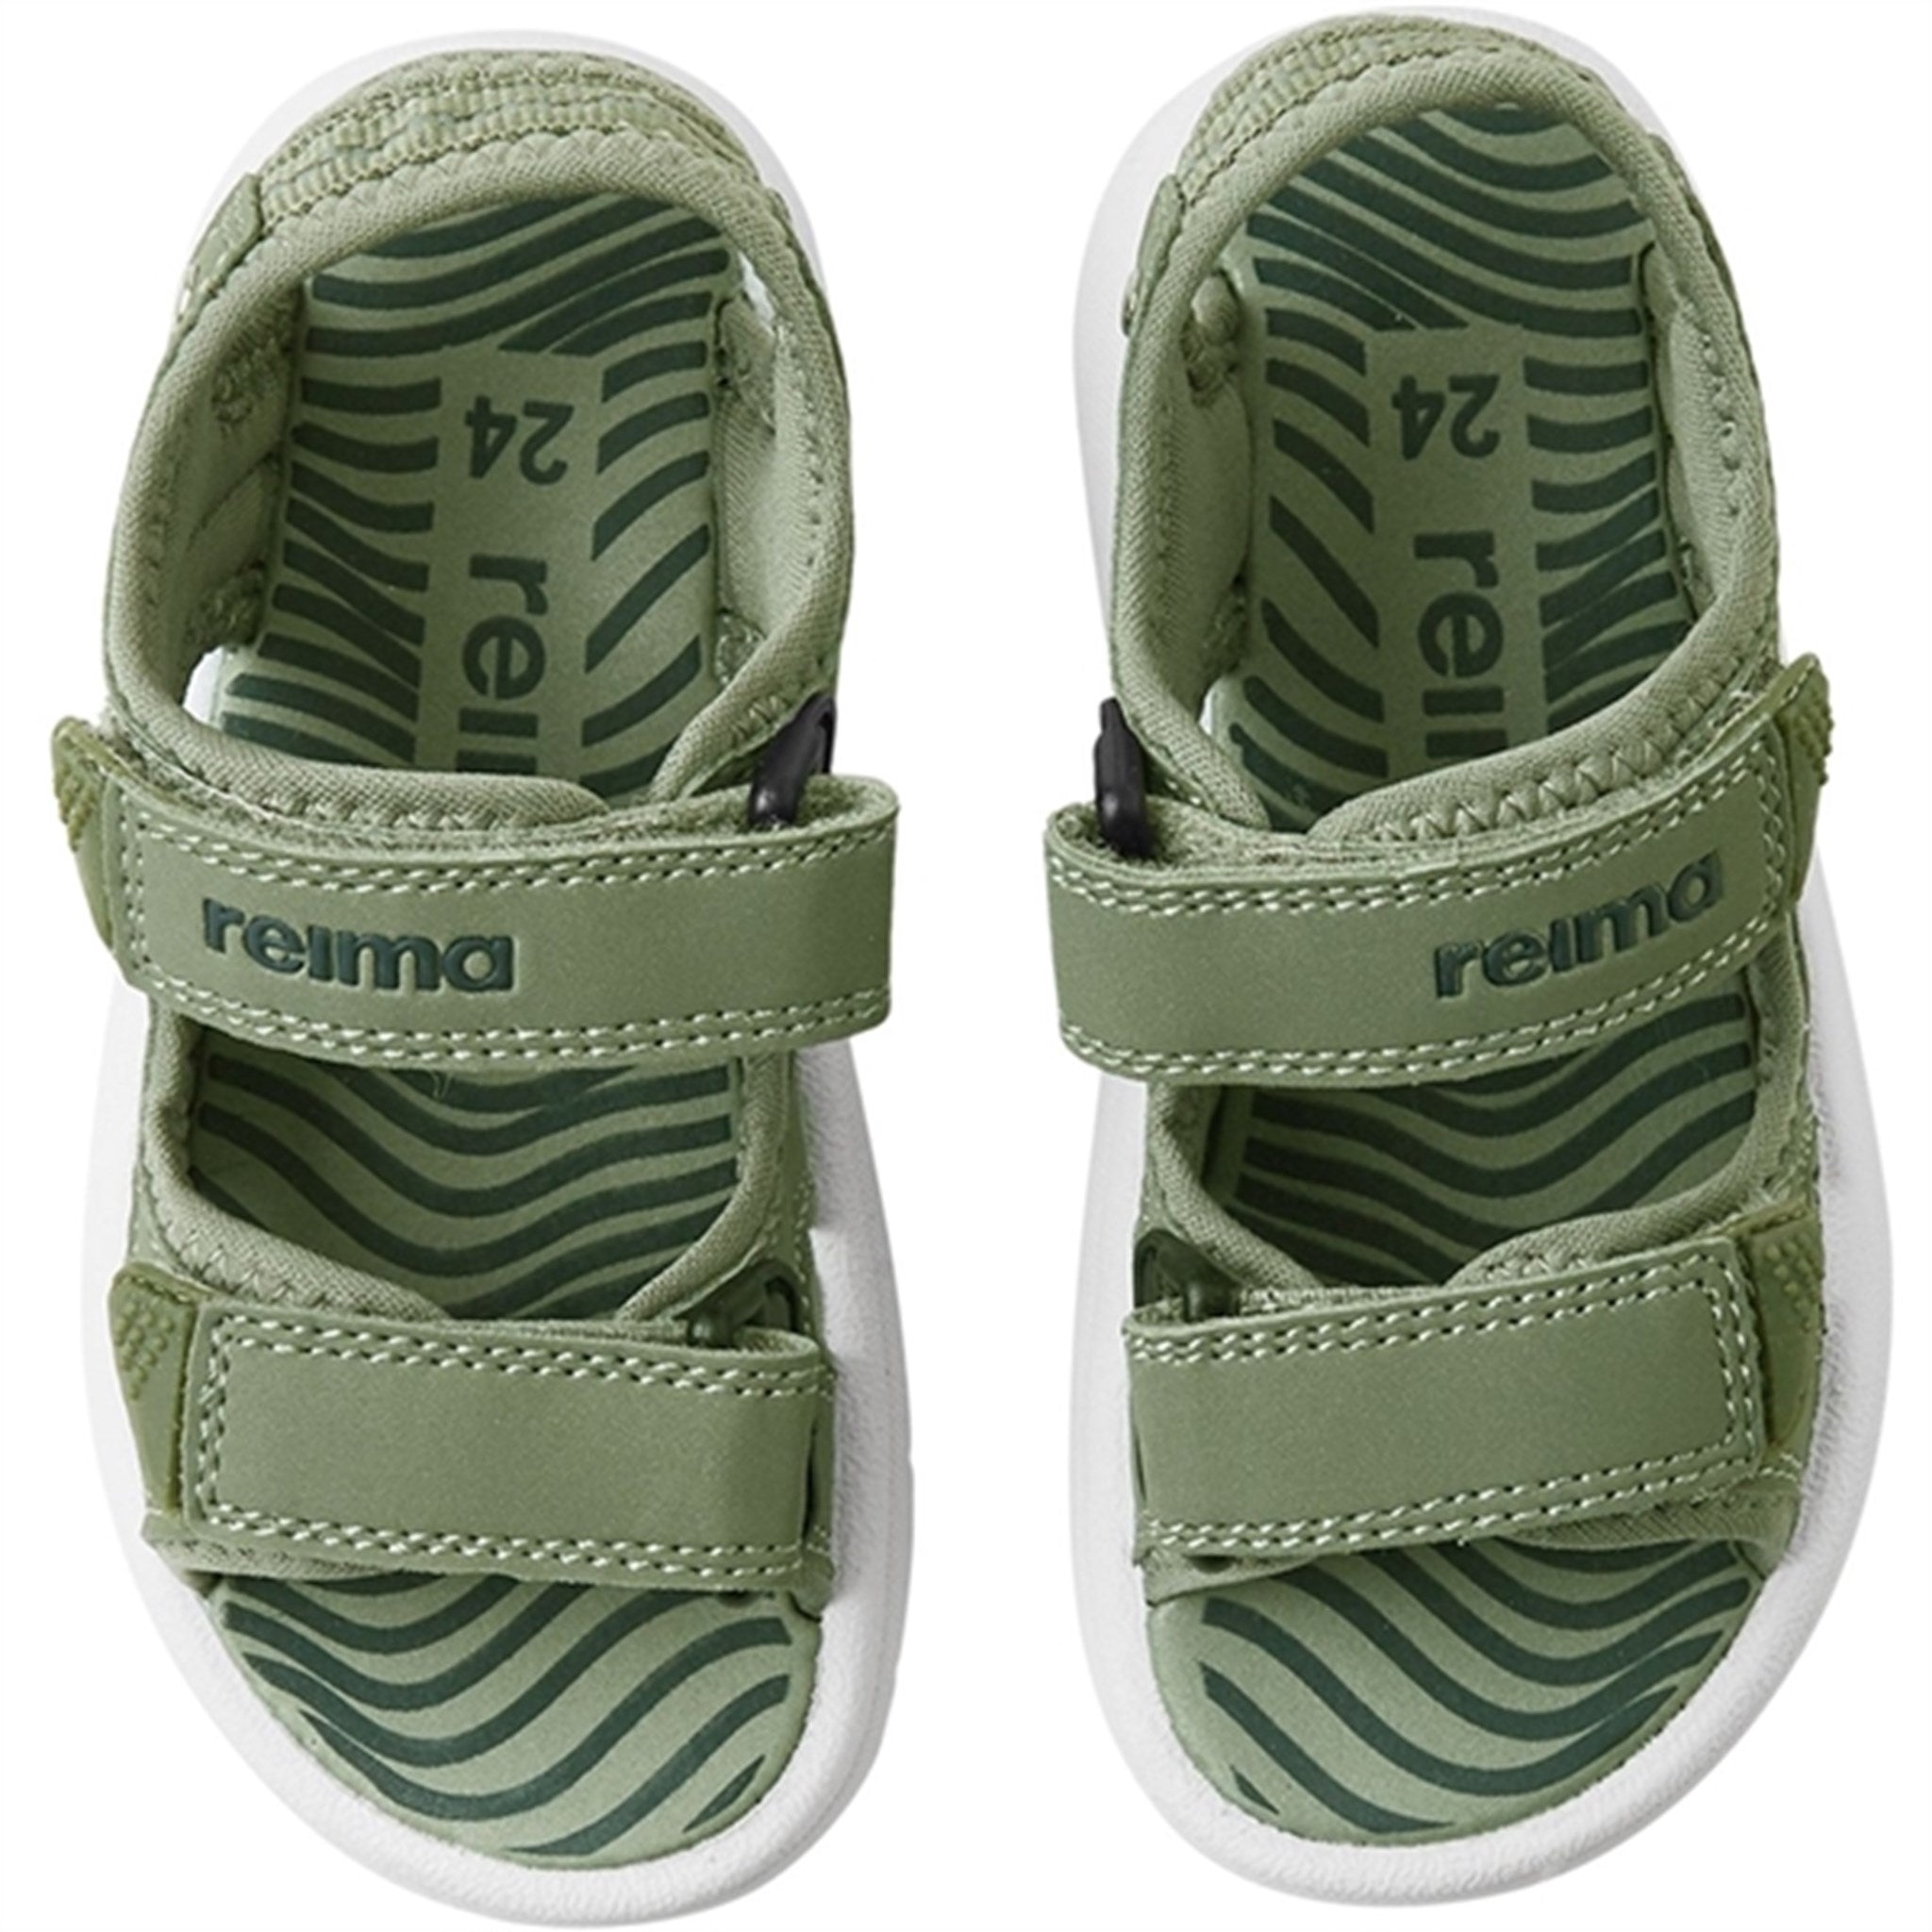 Reima Sandals Bungee Greyish Green 3